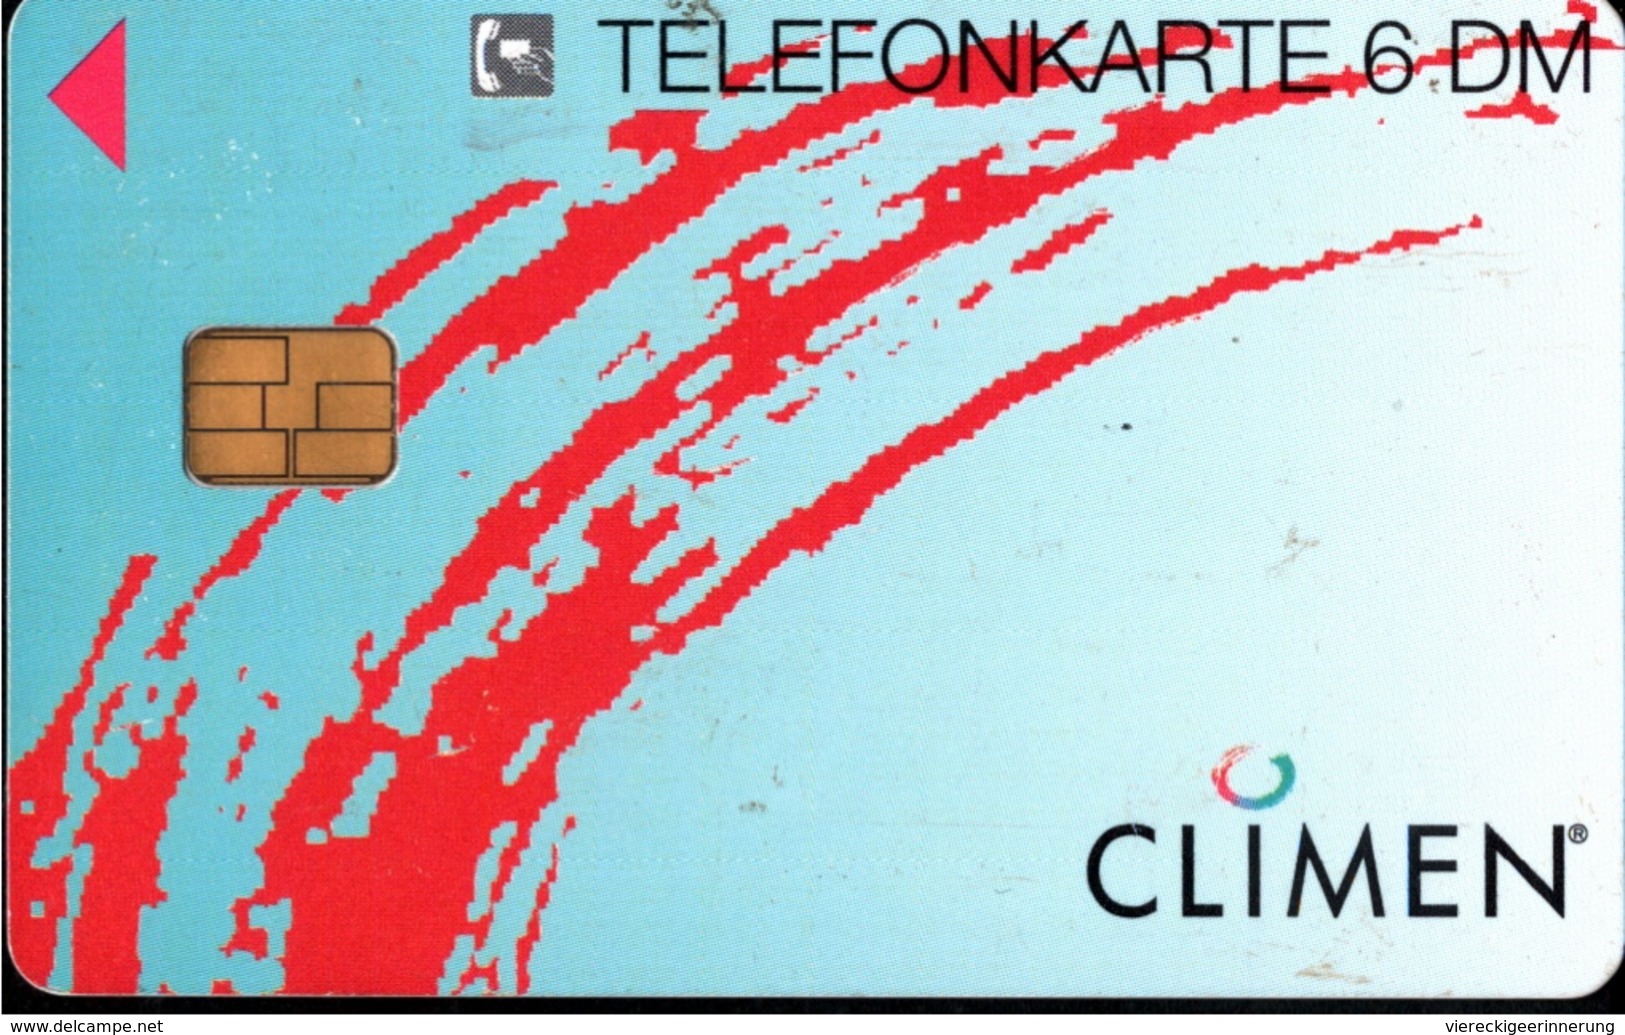 ! Telefonkarte, Telecarte, Phonecard, 1996, O799, Auflage 3000, Schering, Climen, Germany - O-Series : Séries Client